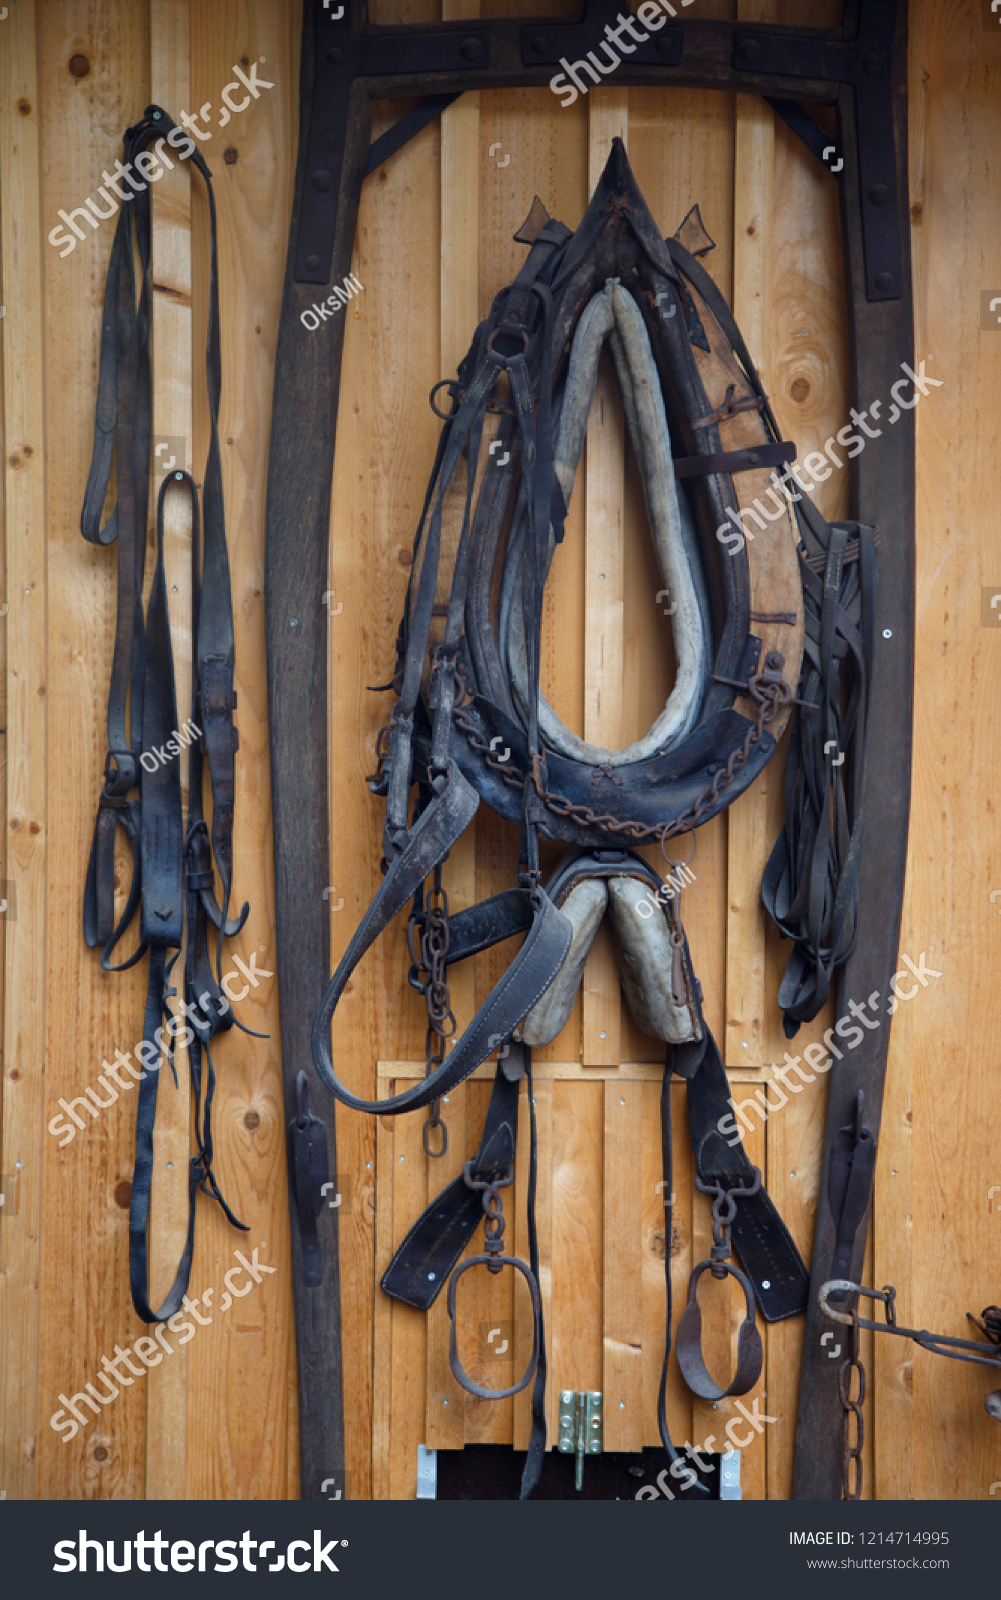 horse tack items